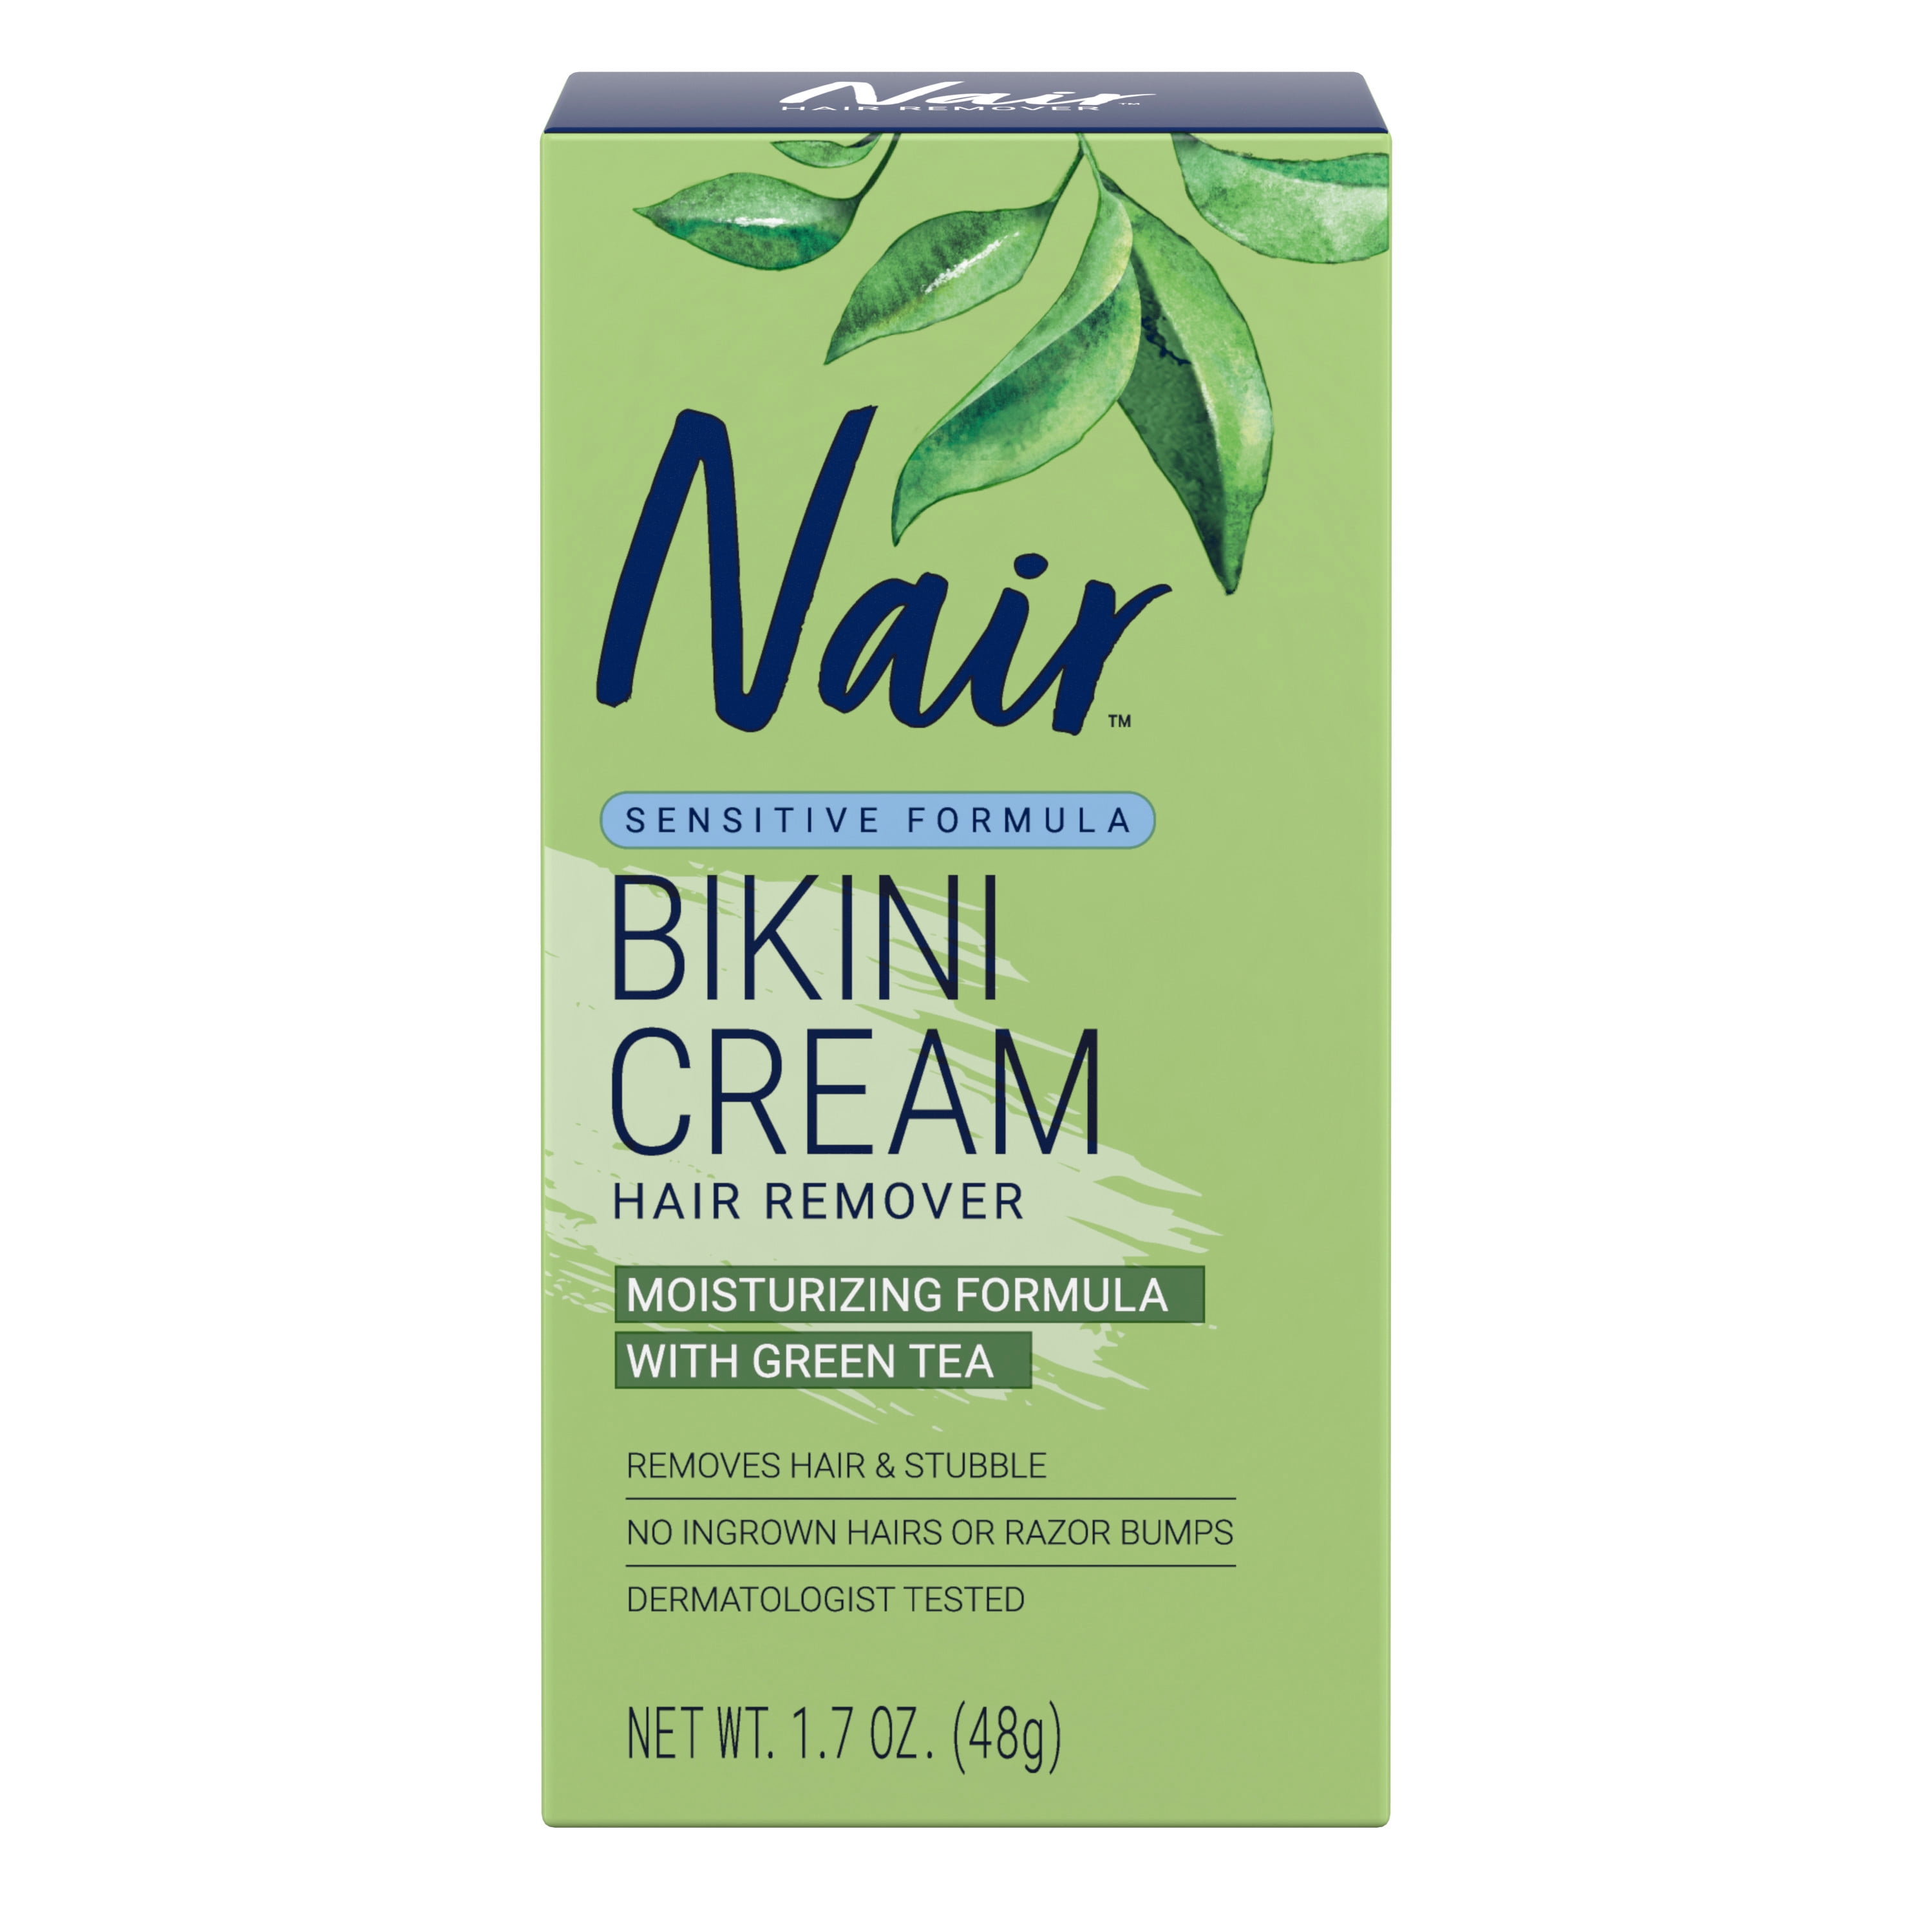 Allergie geleider Broer Nair Hair Remover Sensitive Formula Bikini Cream Hair Removal, 1.7 Oz Box -  Walmart.com